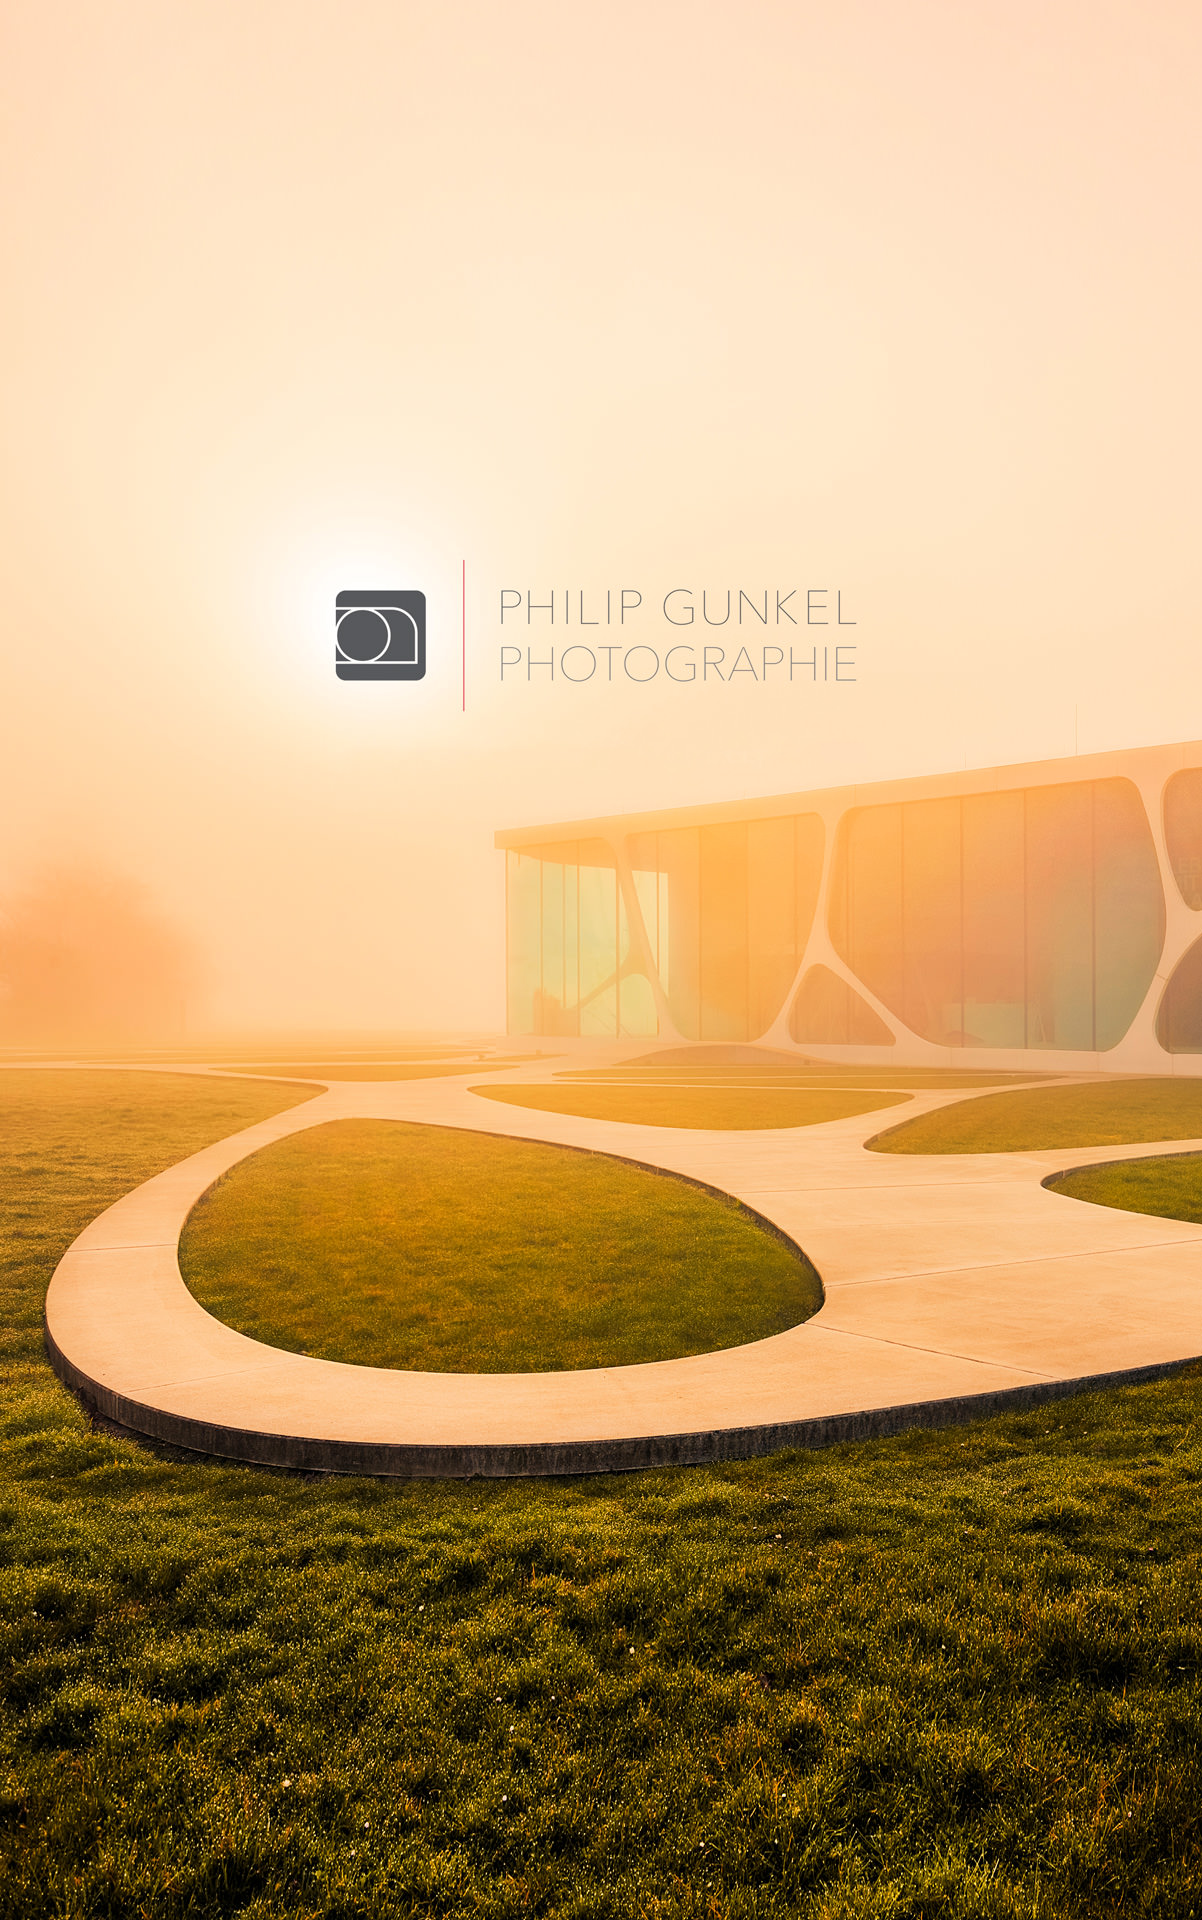 Home Philip Gunkel Architekturfotograf Berlin Immobilienfotograf Architekturfotografie Immobilienfotografie